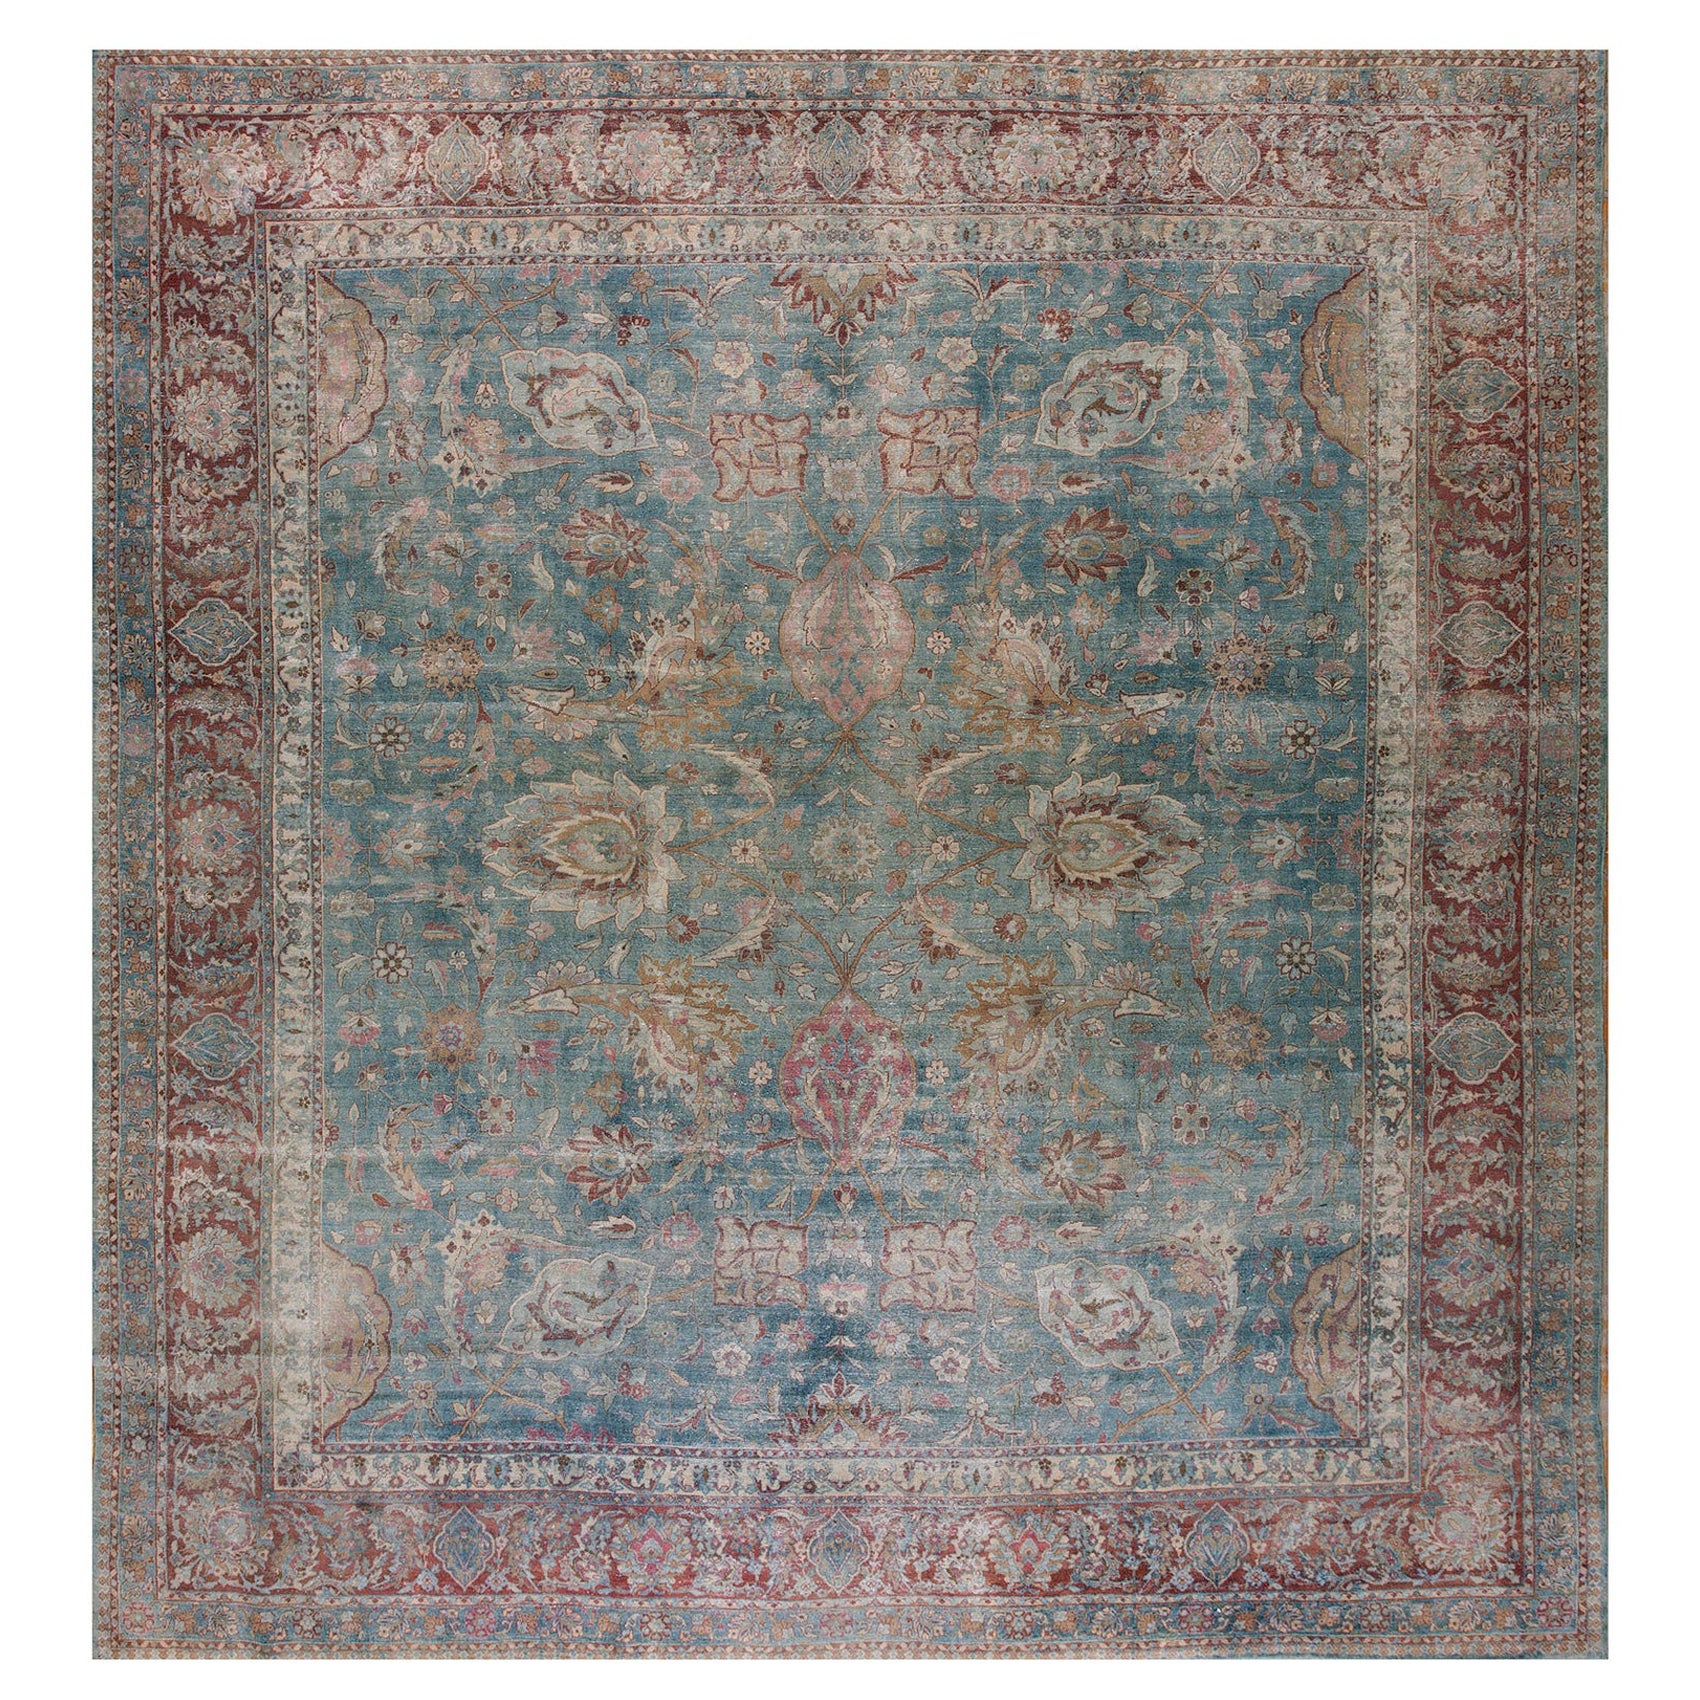 Early 20th Century Persian Kerman Carpet ( 10' 10" x 11' 9" - 330 x 360 cm ) For Sale